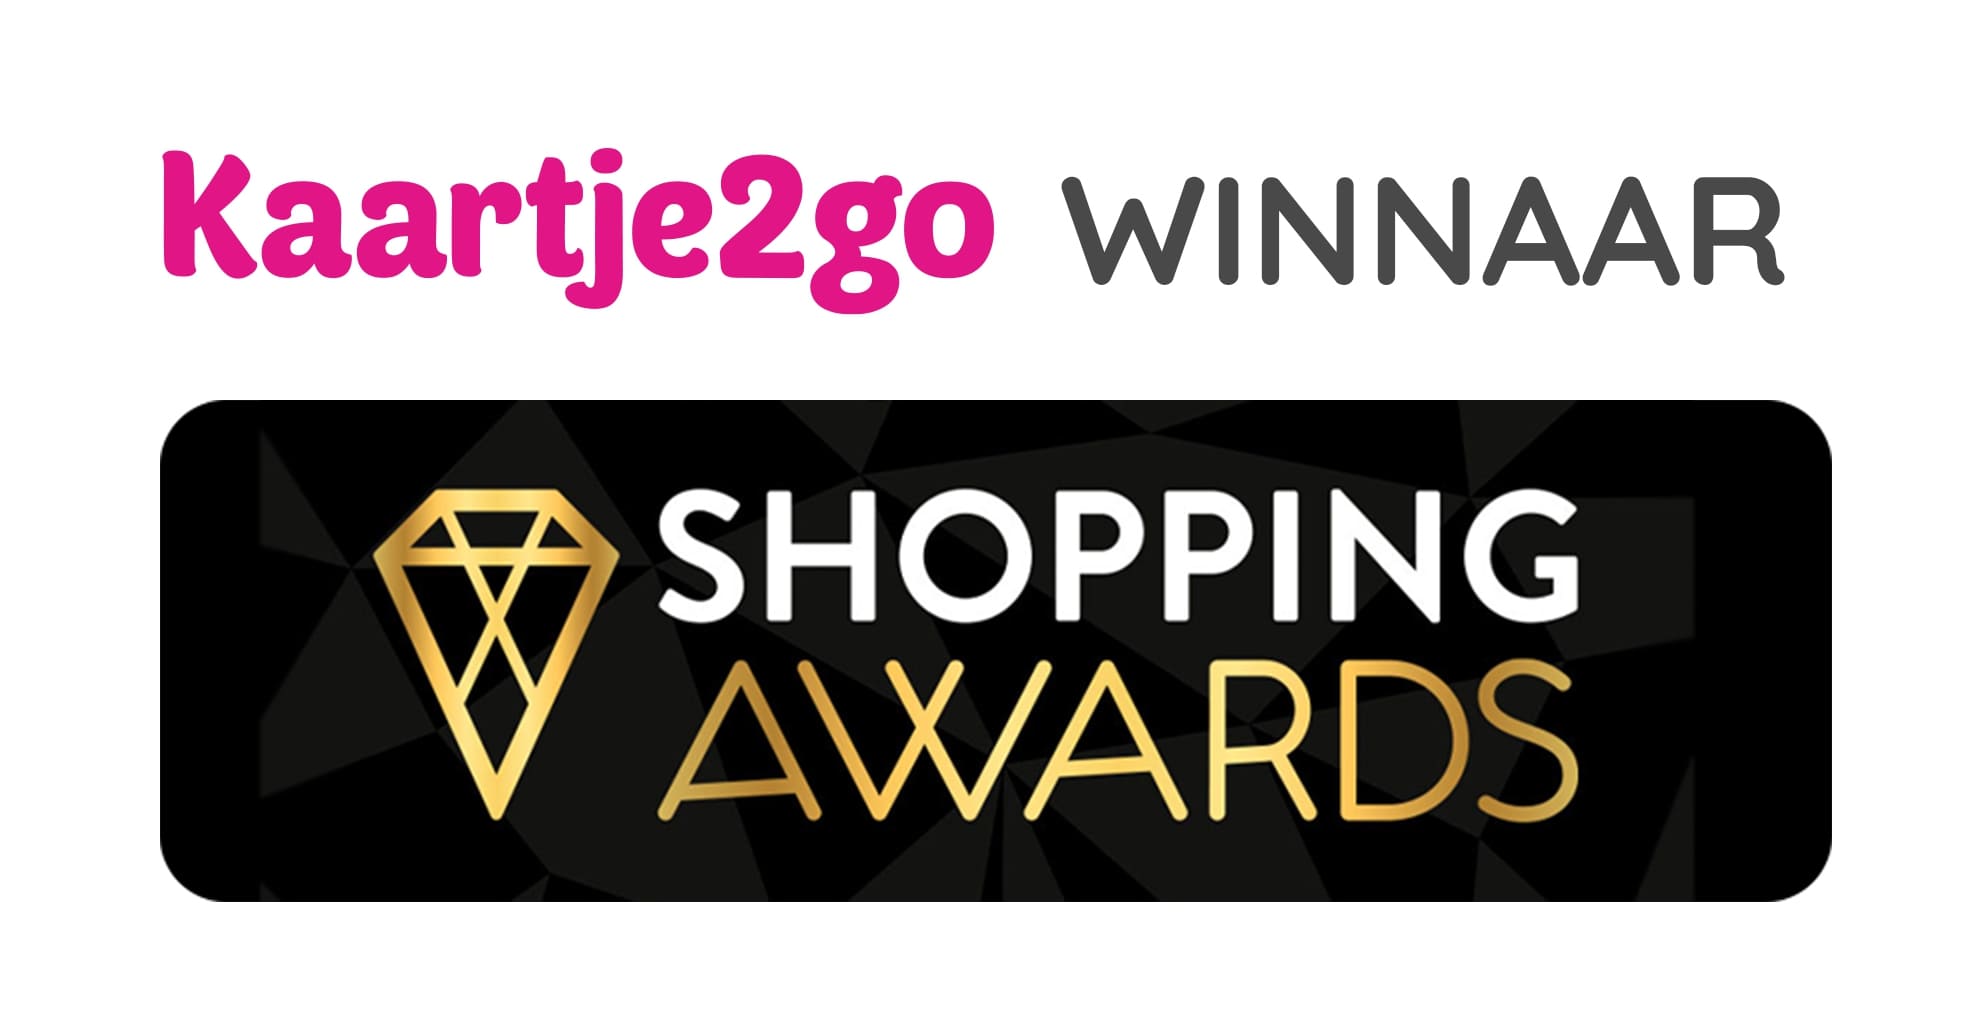 Kaartje2go shopping awards